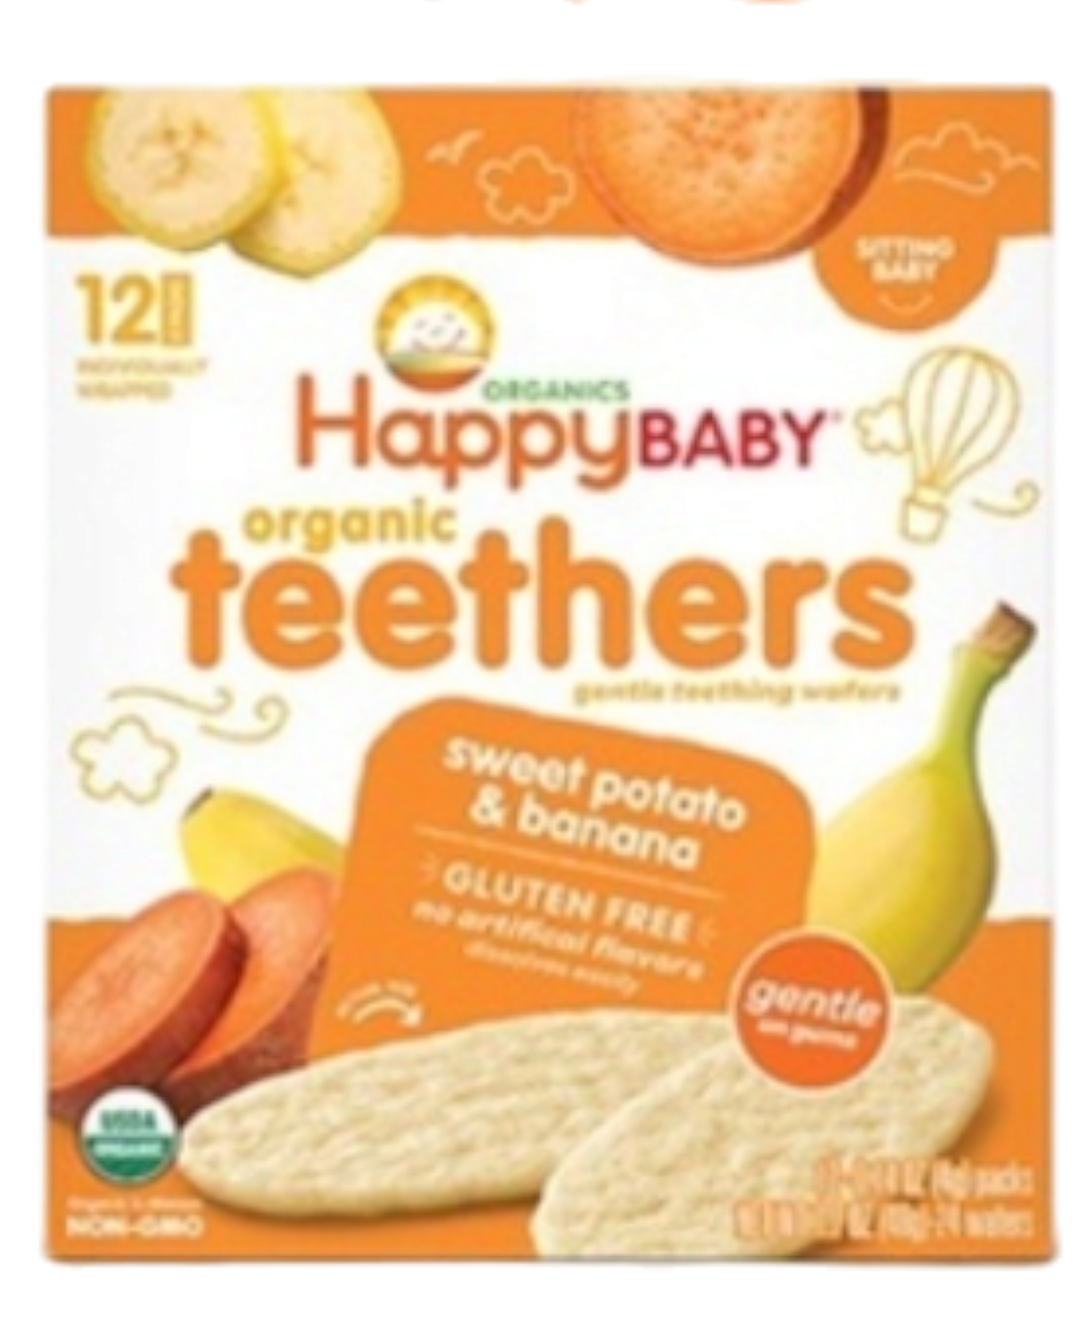 Happybaby Organic Teethers Sweet Potato & Banana 48g